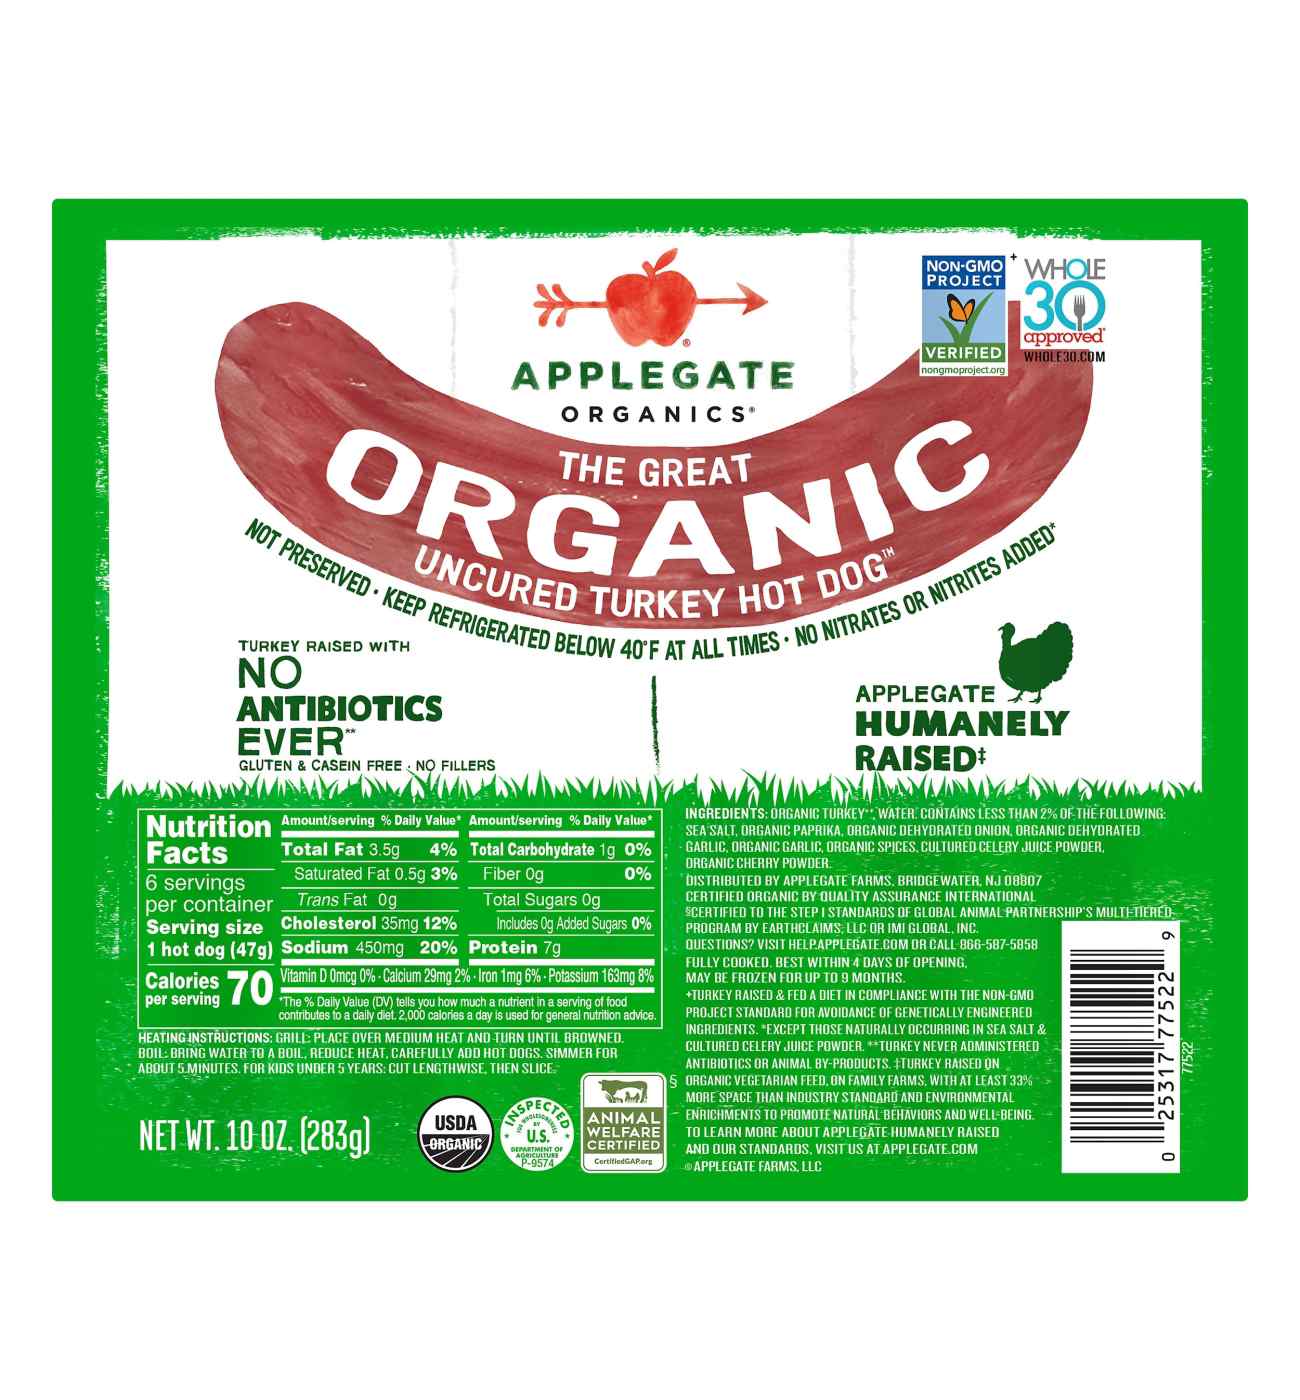 Applegate Organics Turkey Hot Dogs; image 1 of 4